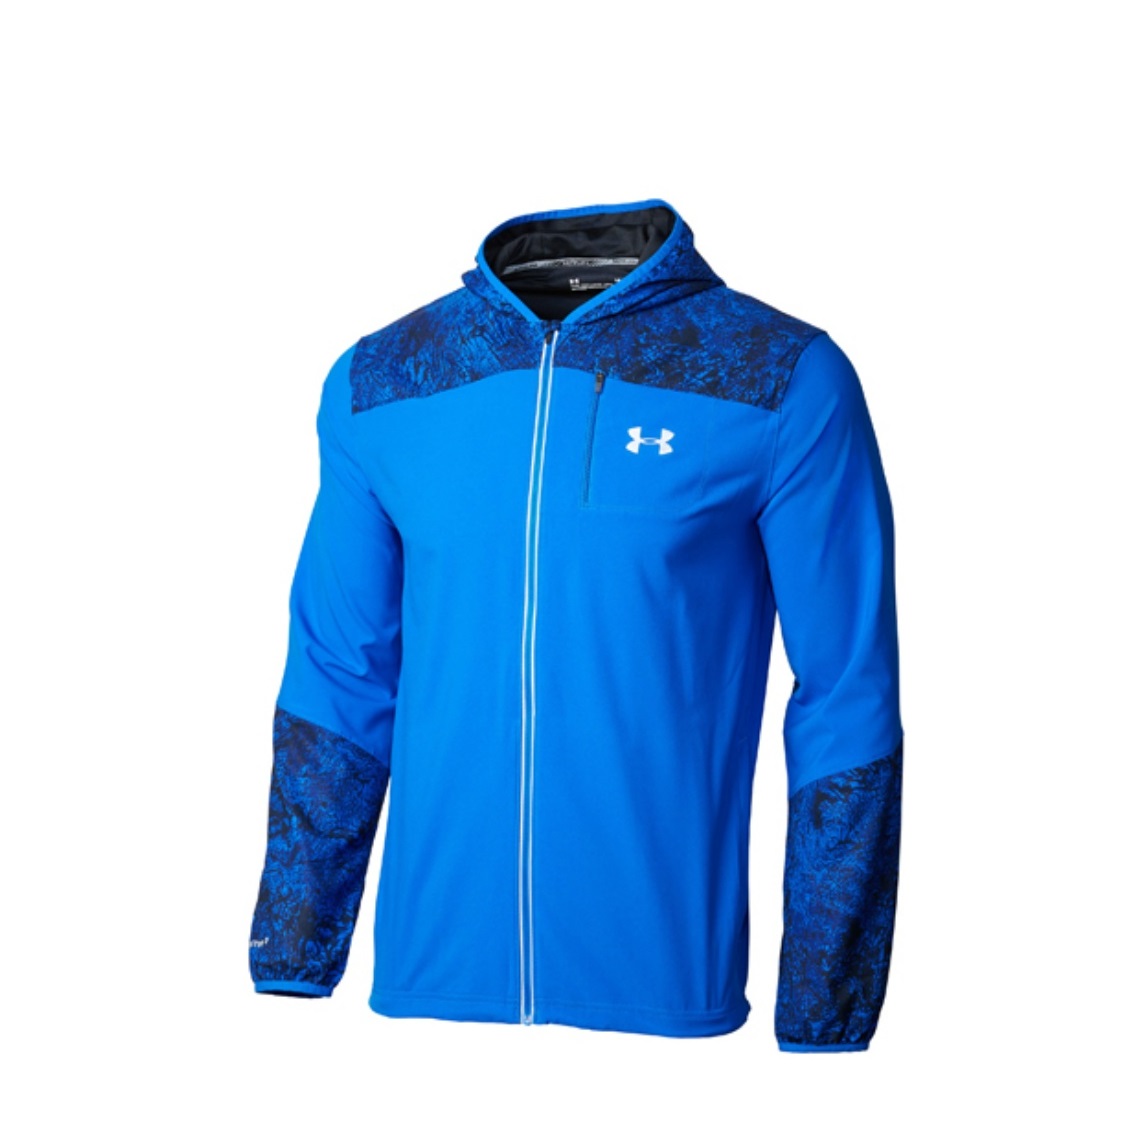 Persoon belast met sportgame Vegen informeel Clothing | Under armour Storm Run Printed Jacket | Fitness